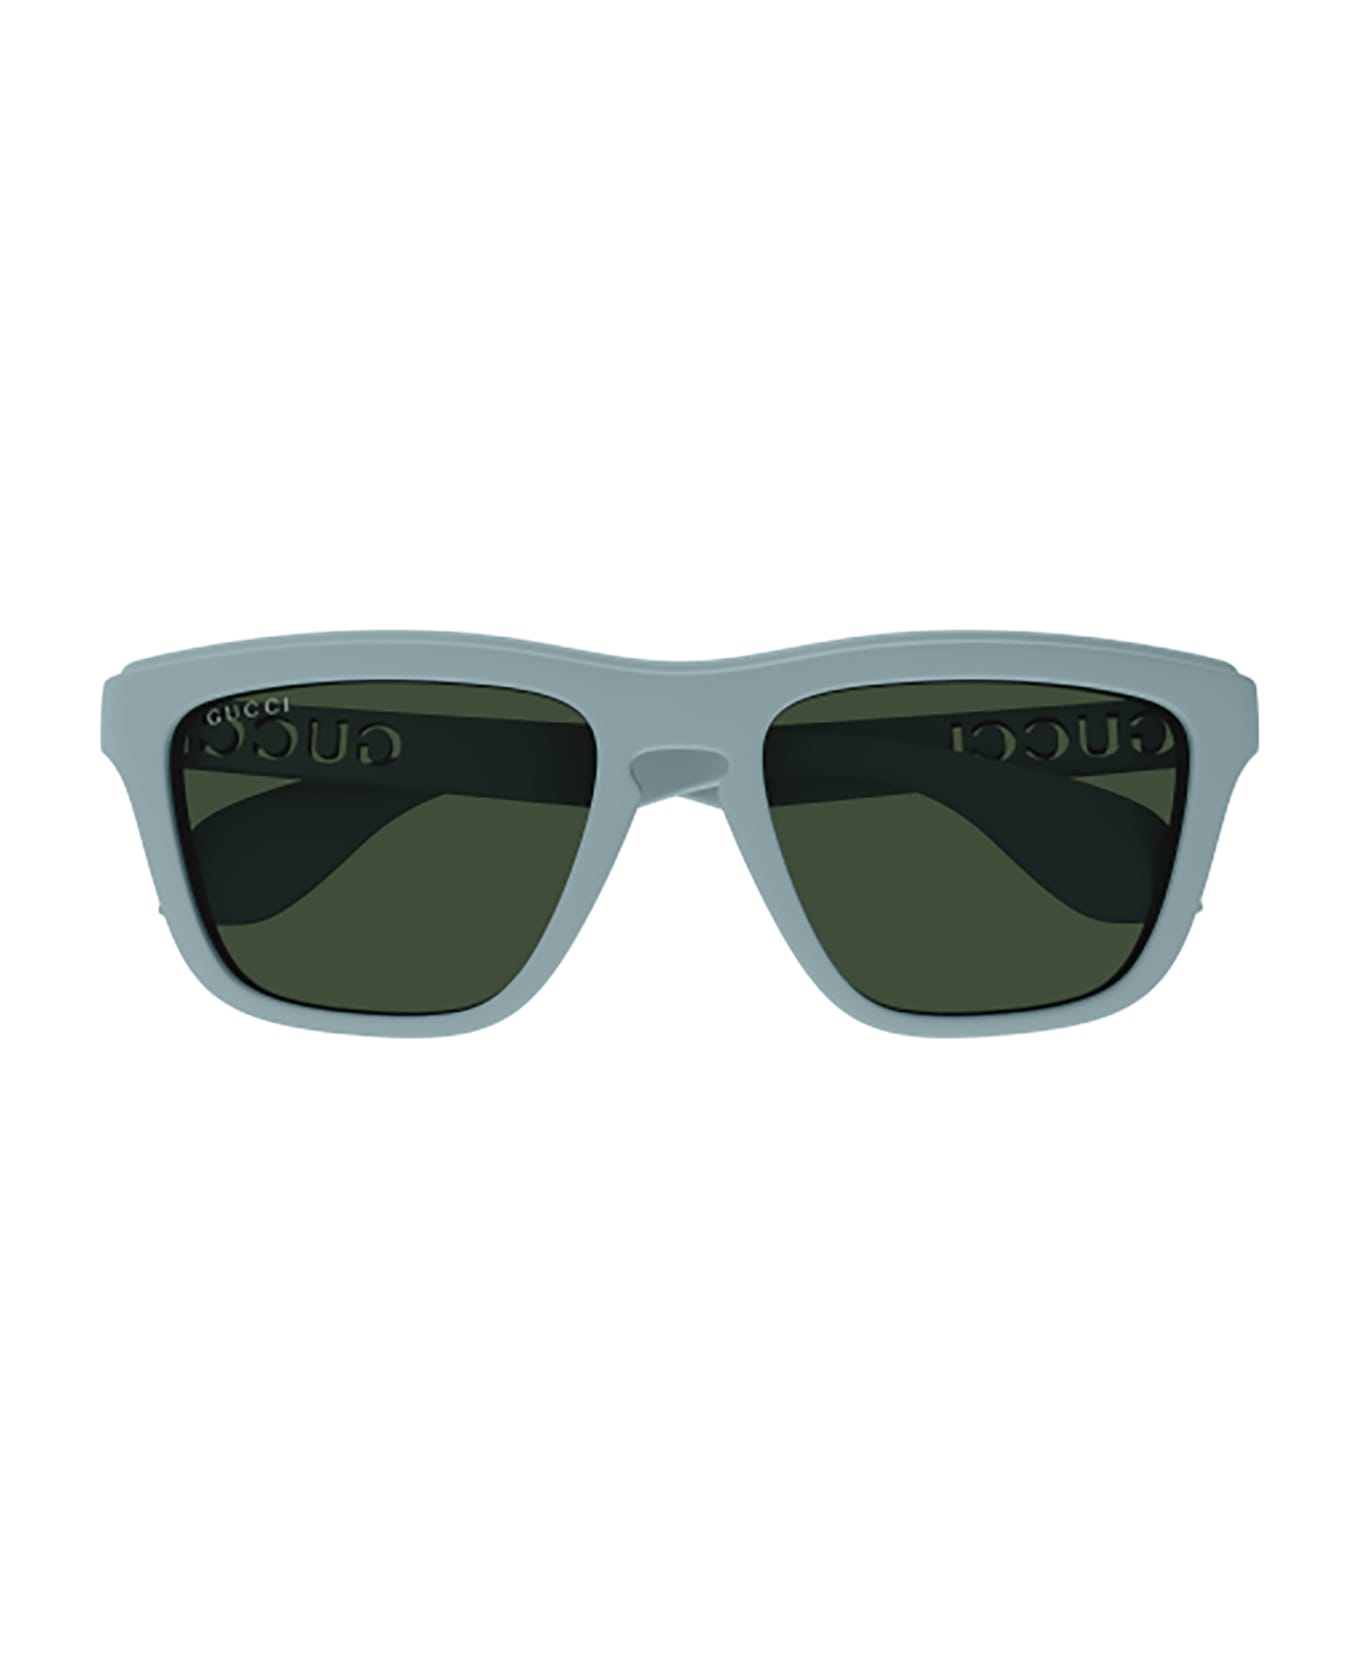 Gucci Eyewear GG1571S Sunglasses - Light Blue Light Blue サングラス